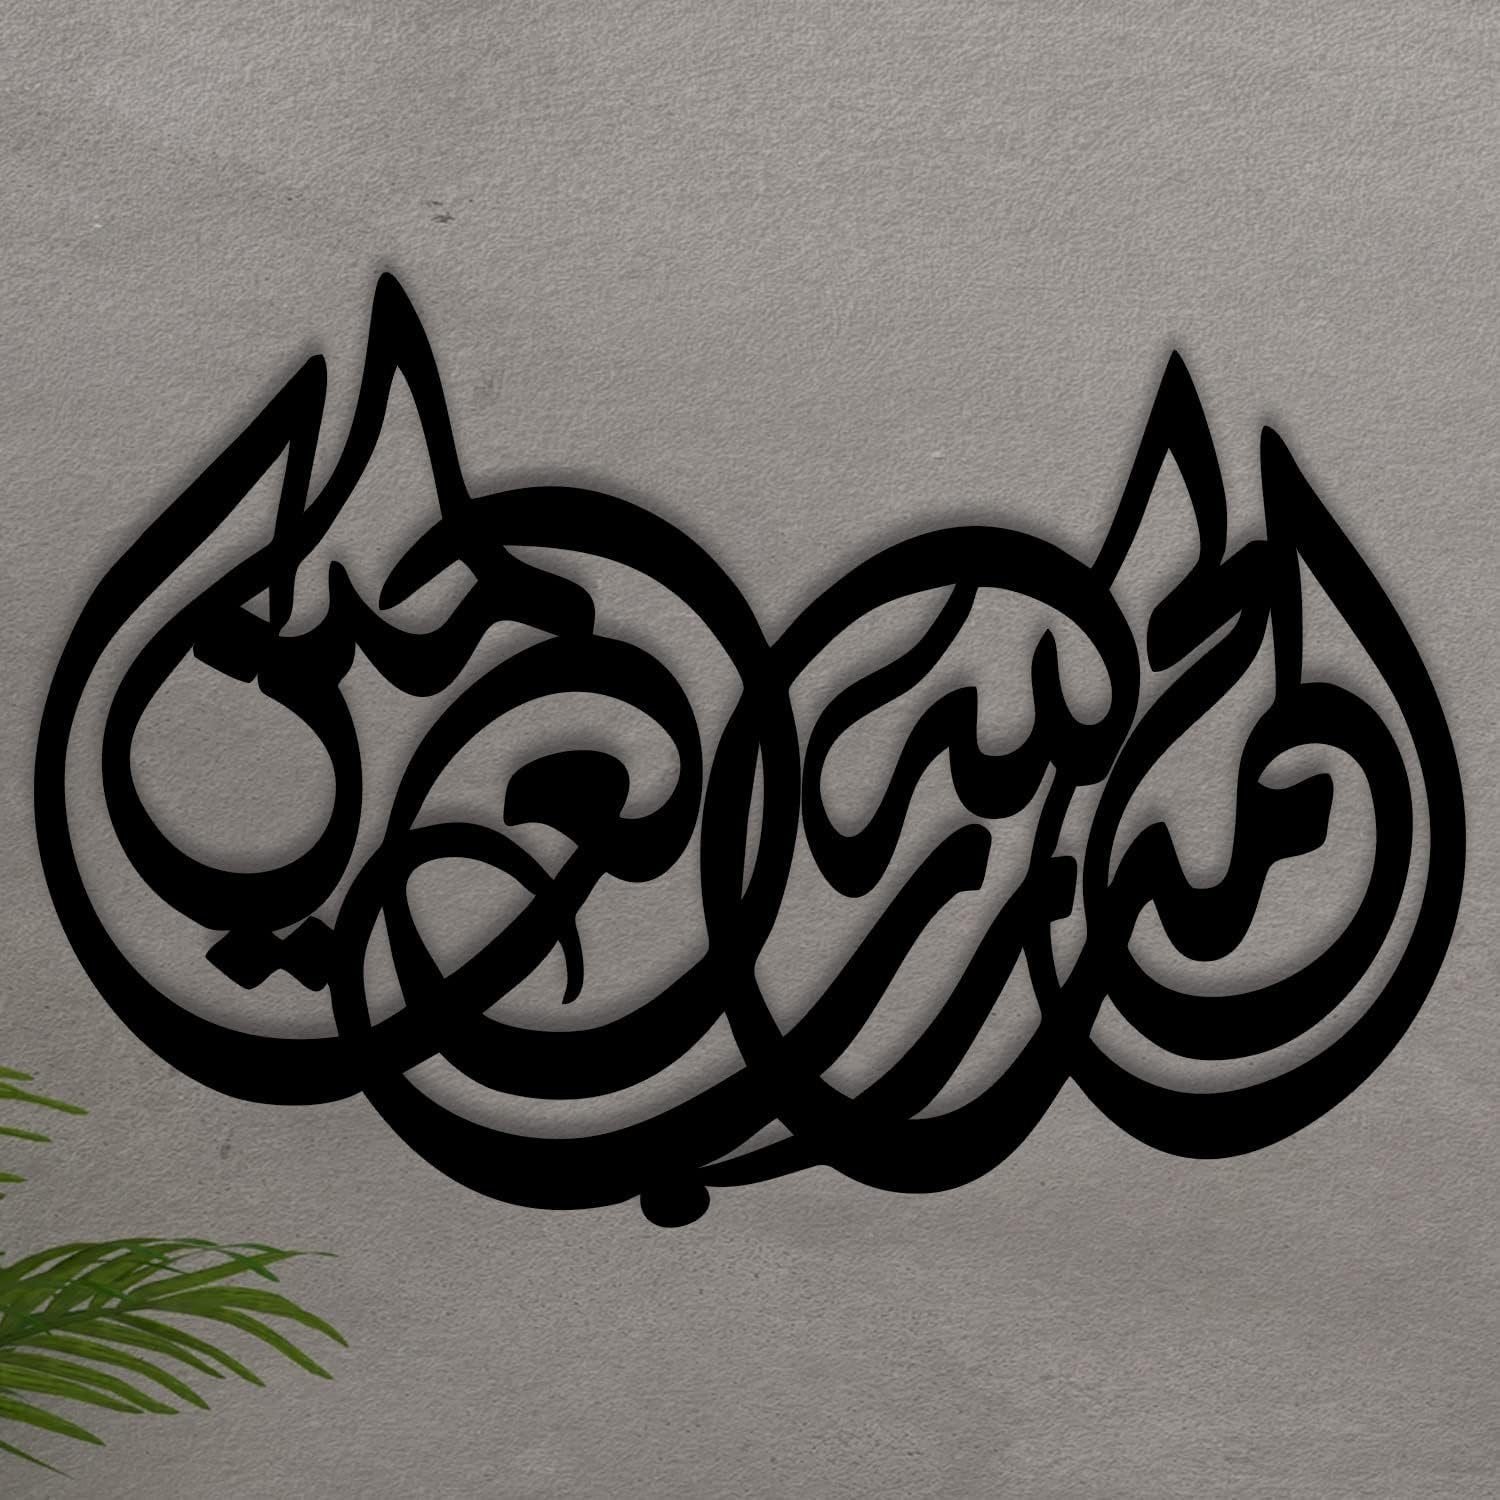 6 Deko-Schriftzug gebührt الحمد in رب Alles Gott - Schwarz - FOLIEN # لله LEON العالمين Lob